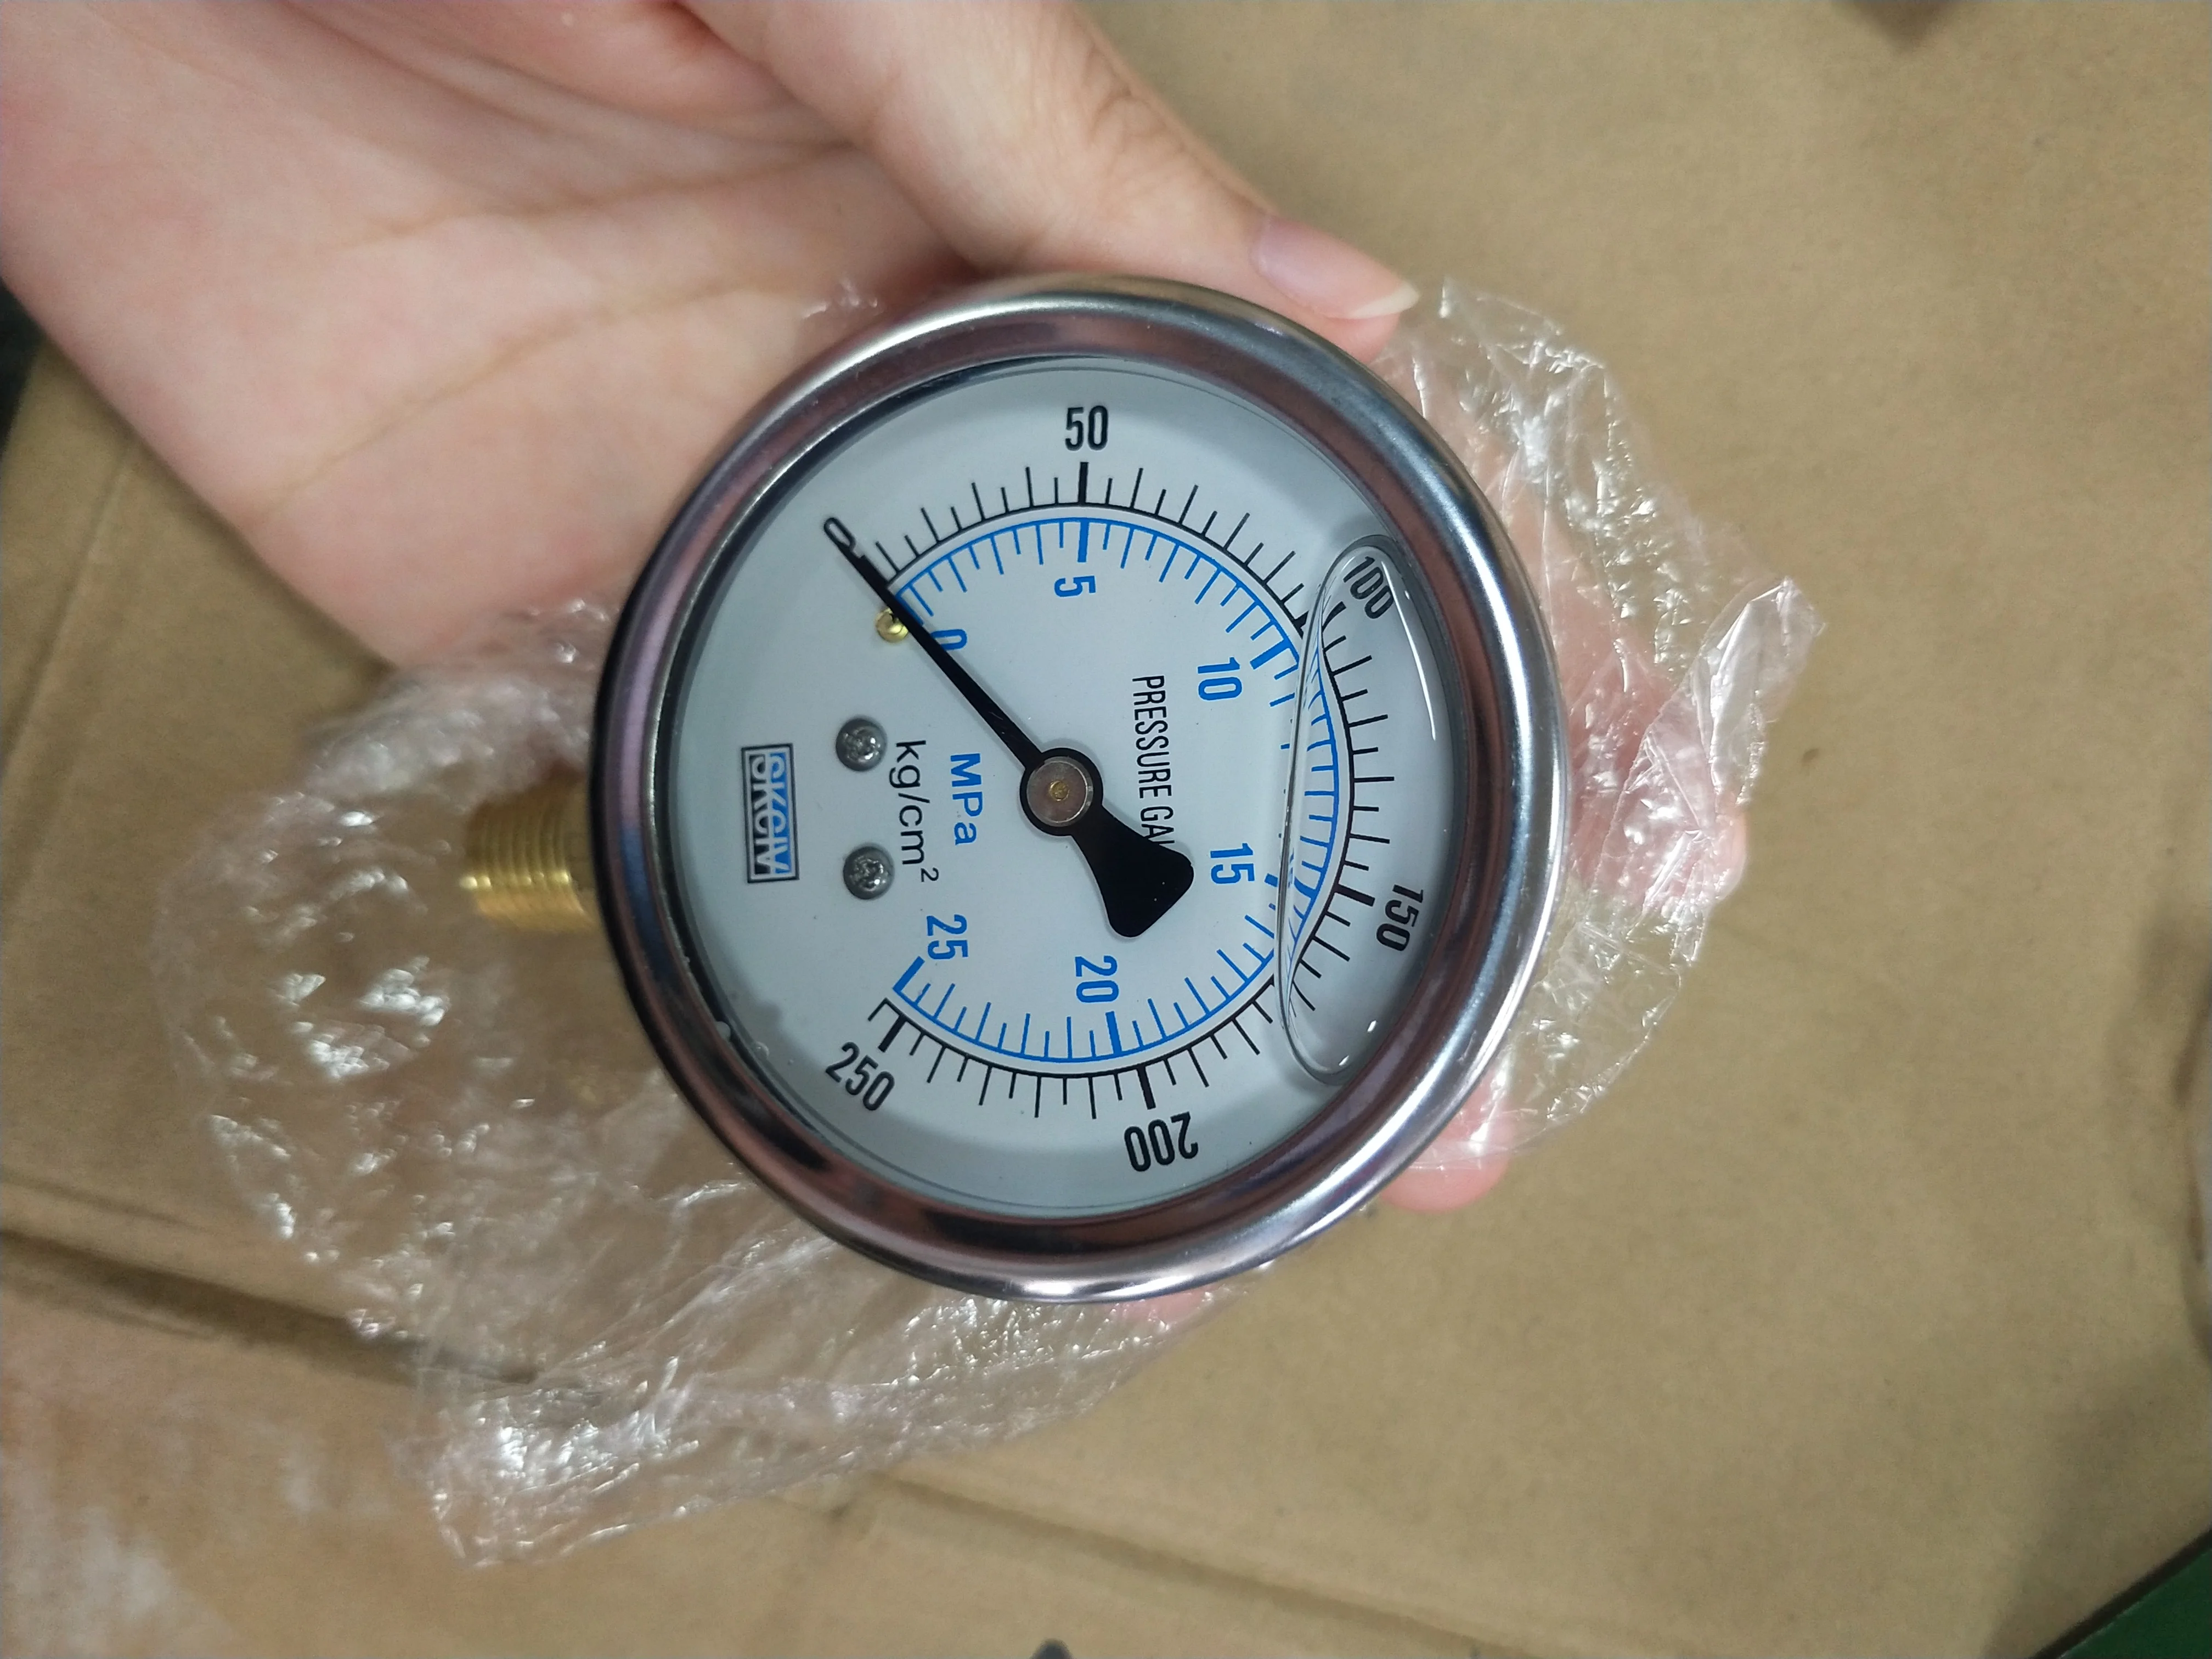 Akozon Hydraulic Pressure Gauge Manometer Outil Mesure de Mètre Pression deau hydraulique 0-400BAR 0-5800PSI G1/4 Cadran de Mesure de Pression Hydraulique de 63mm 